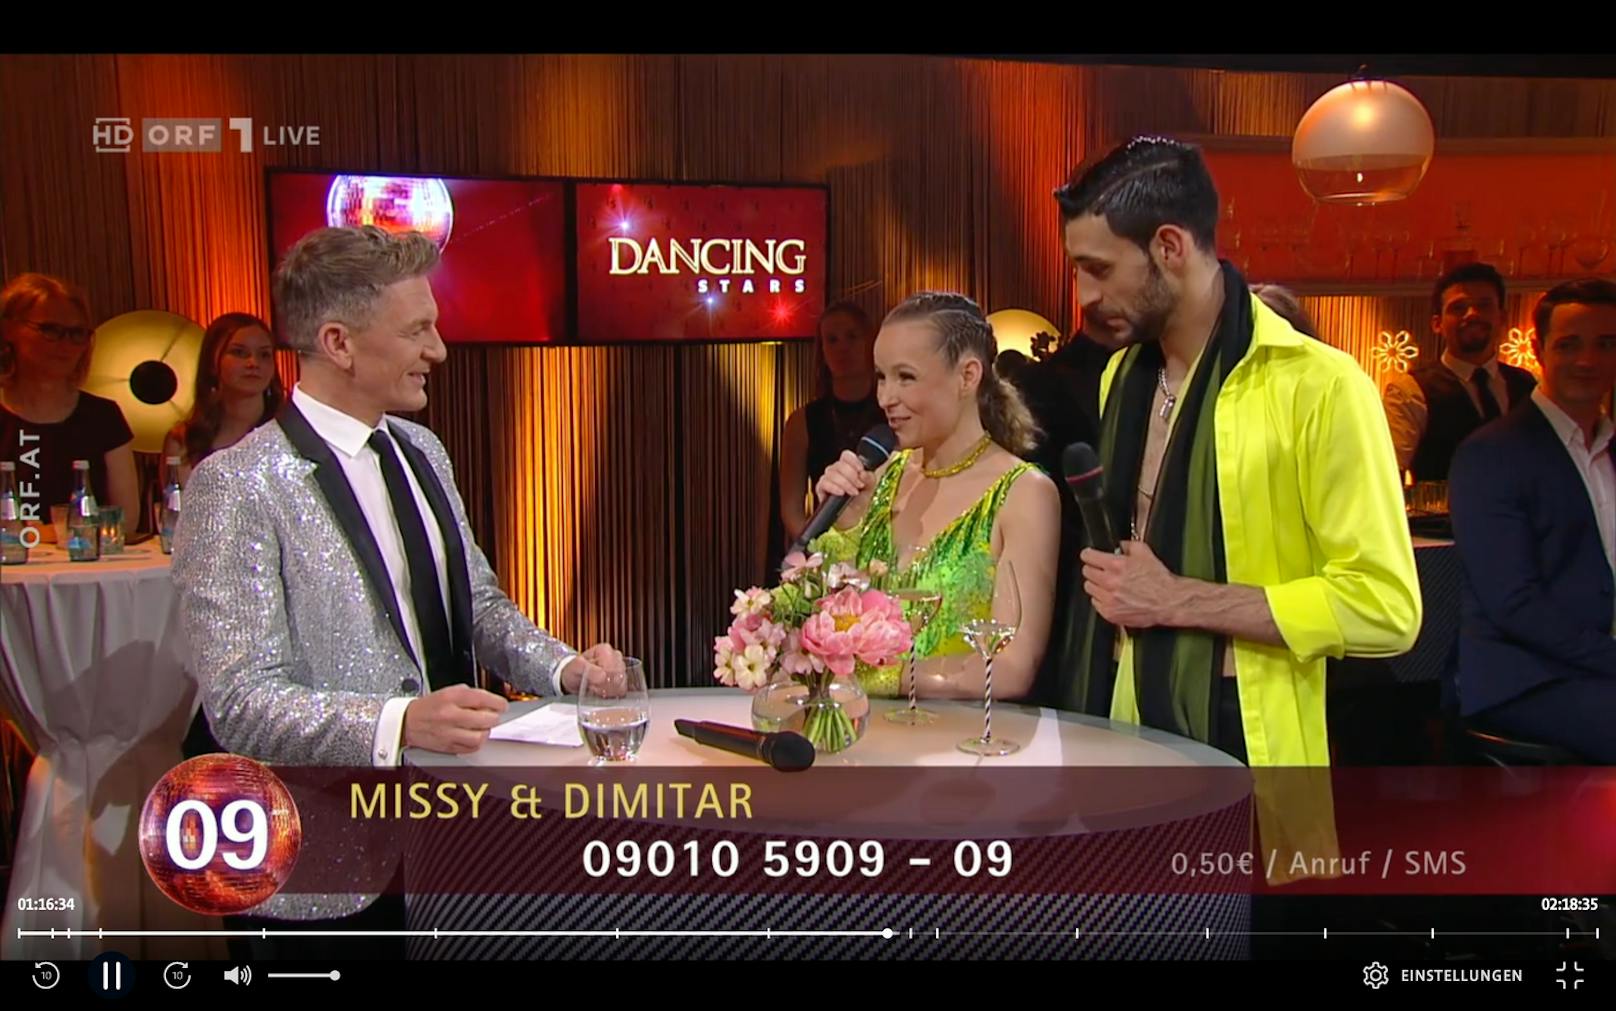 "Dancing Star" Missy May: "Spaziere nackt aus dem Haus"